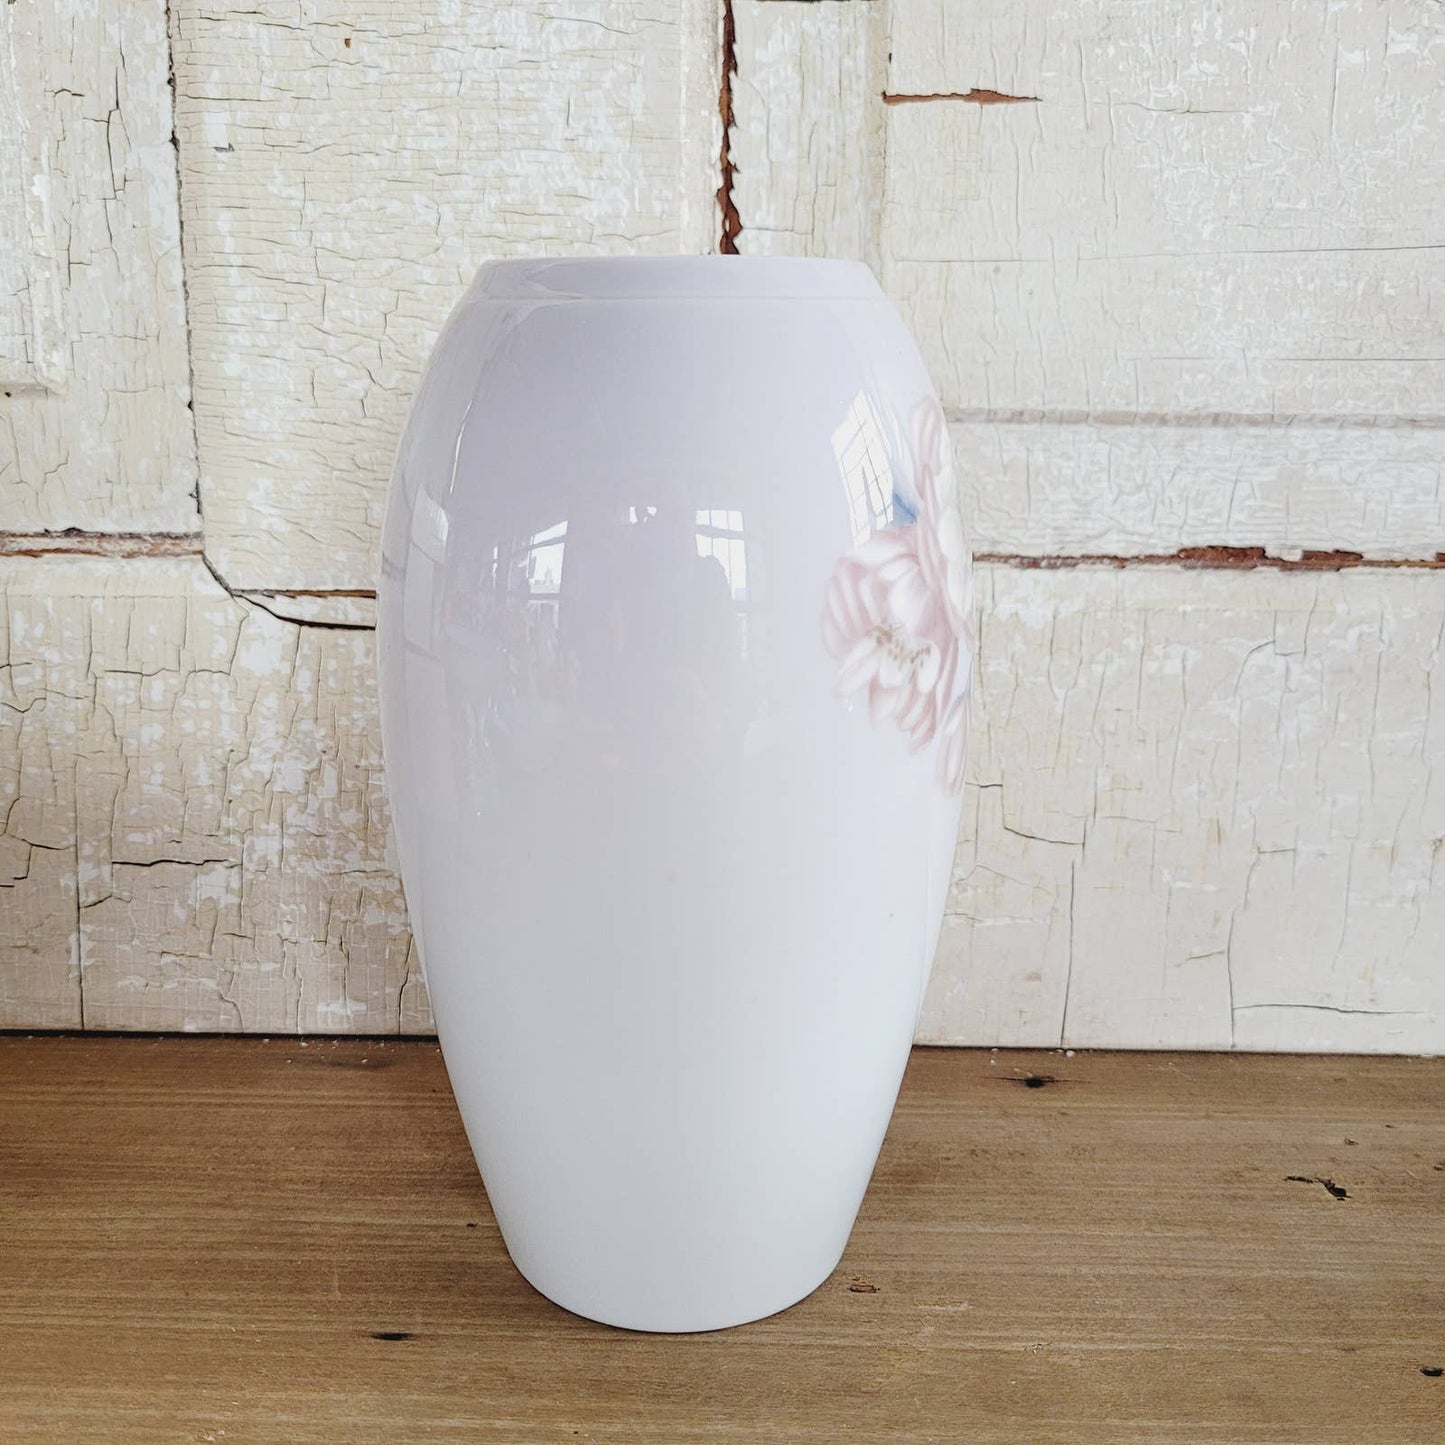 Vintage Bing & Grondahl Vase White Pink Flowers